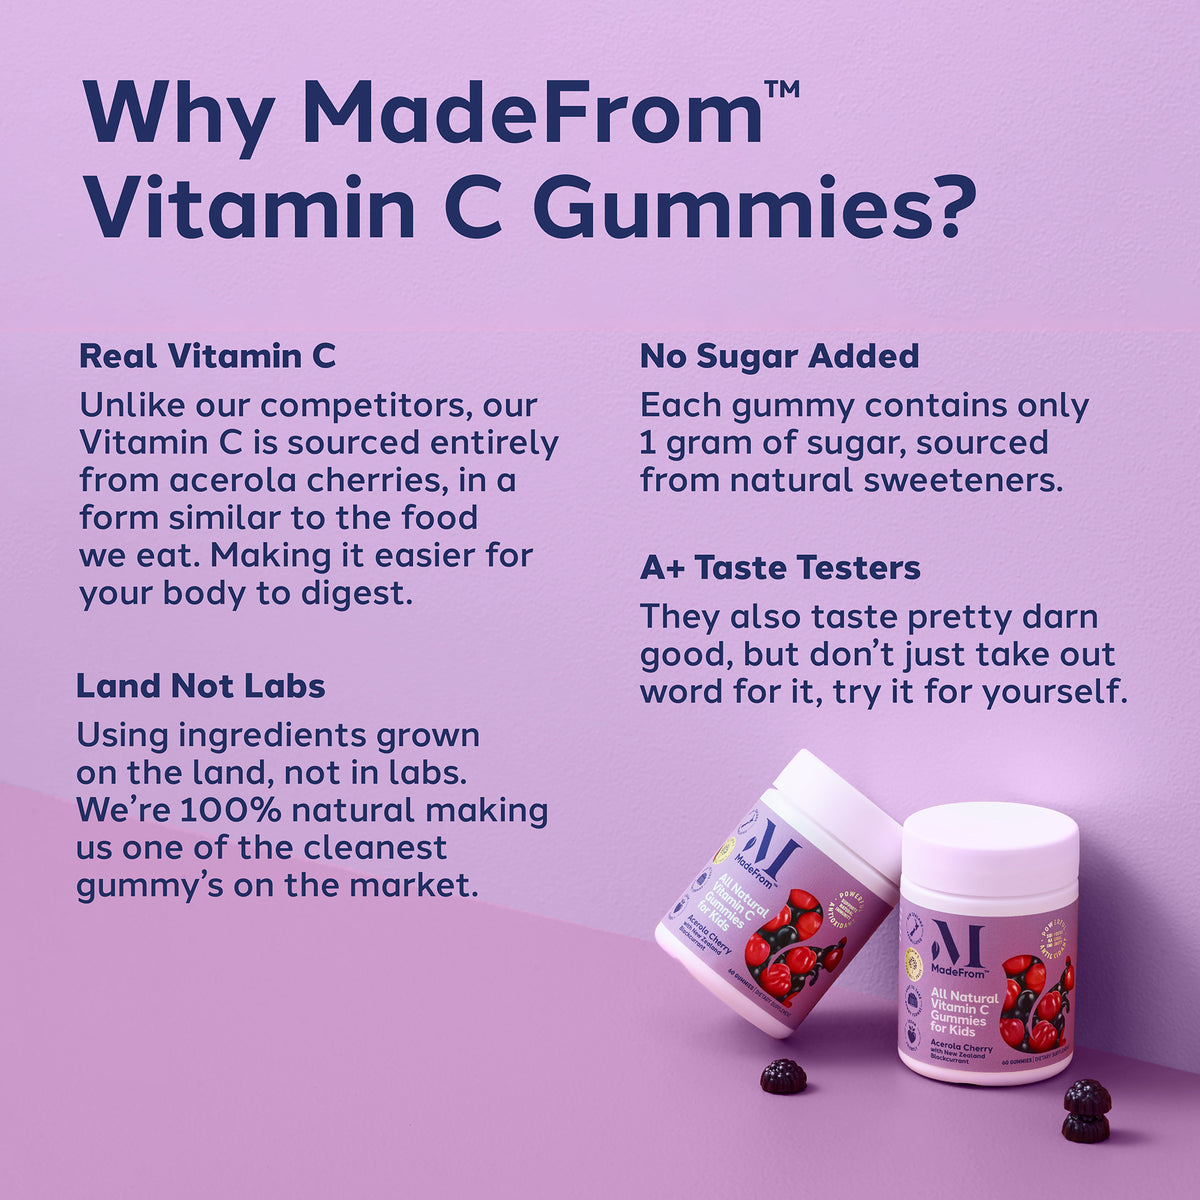 All Natural Vitamin C Gummies for Kids